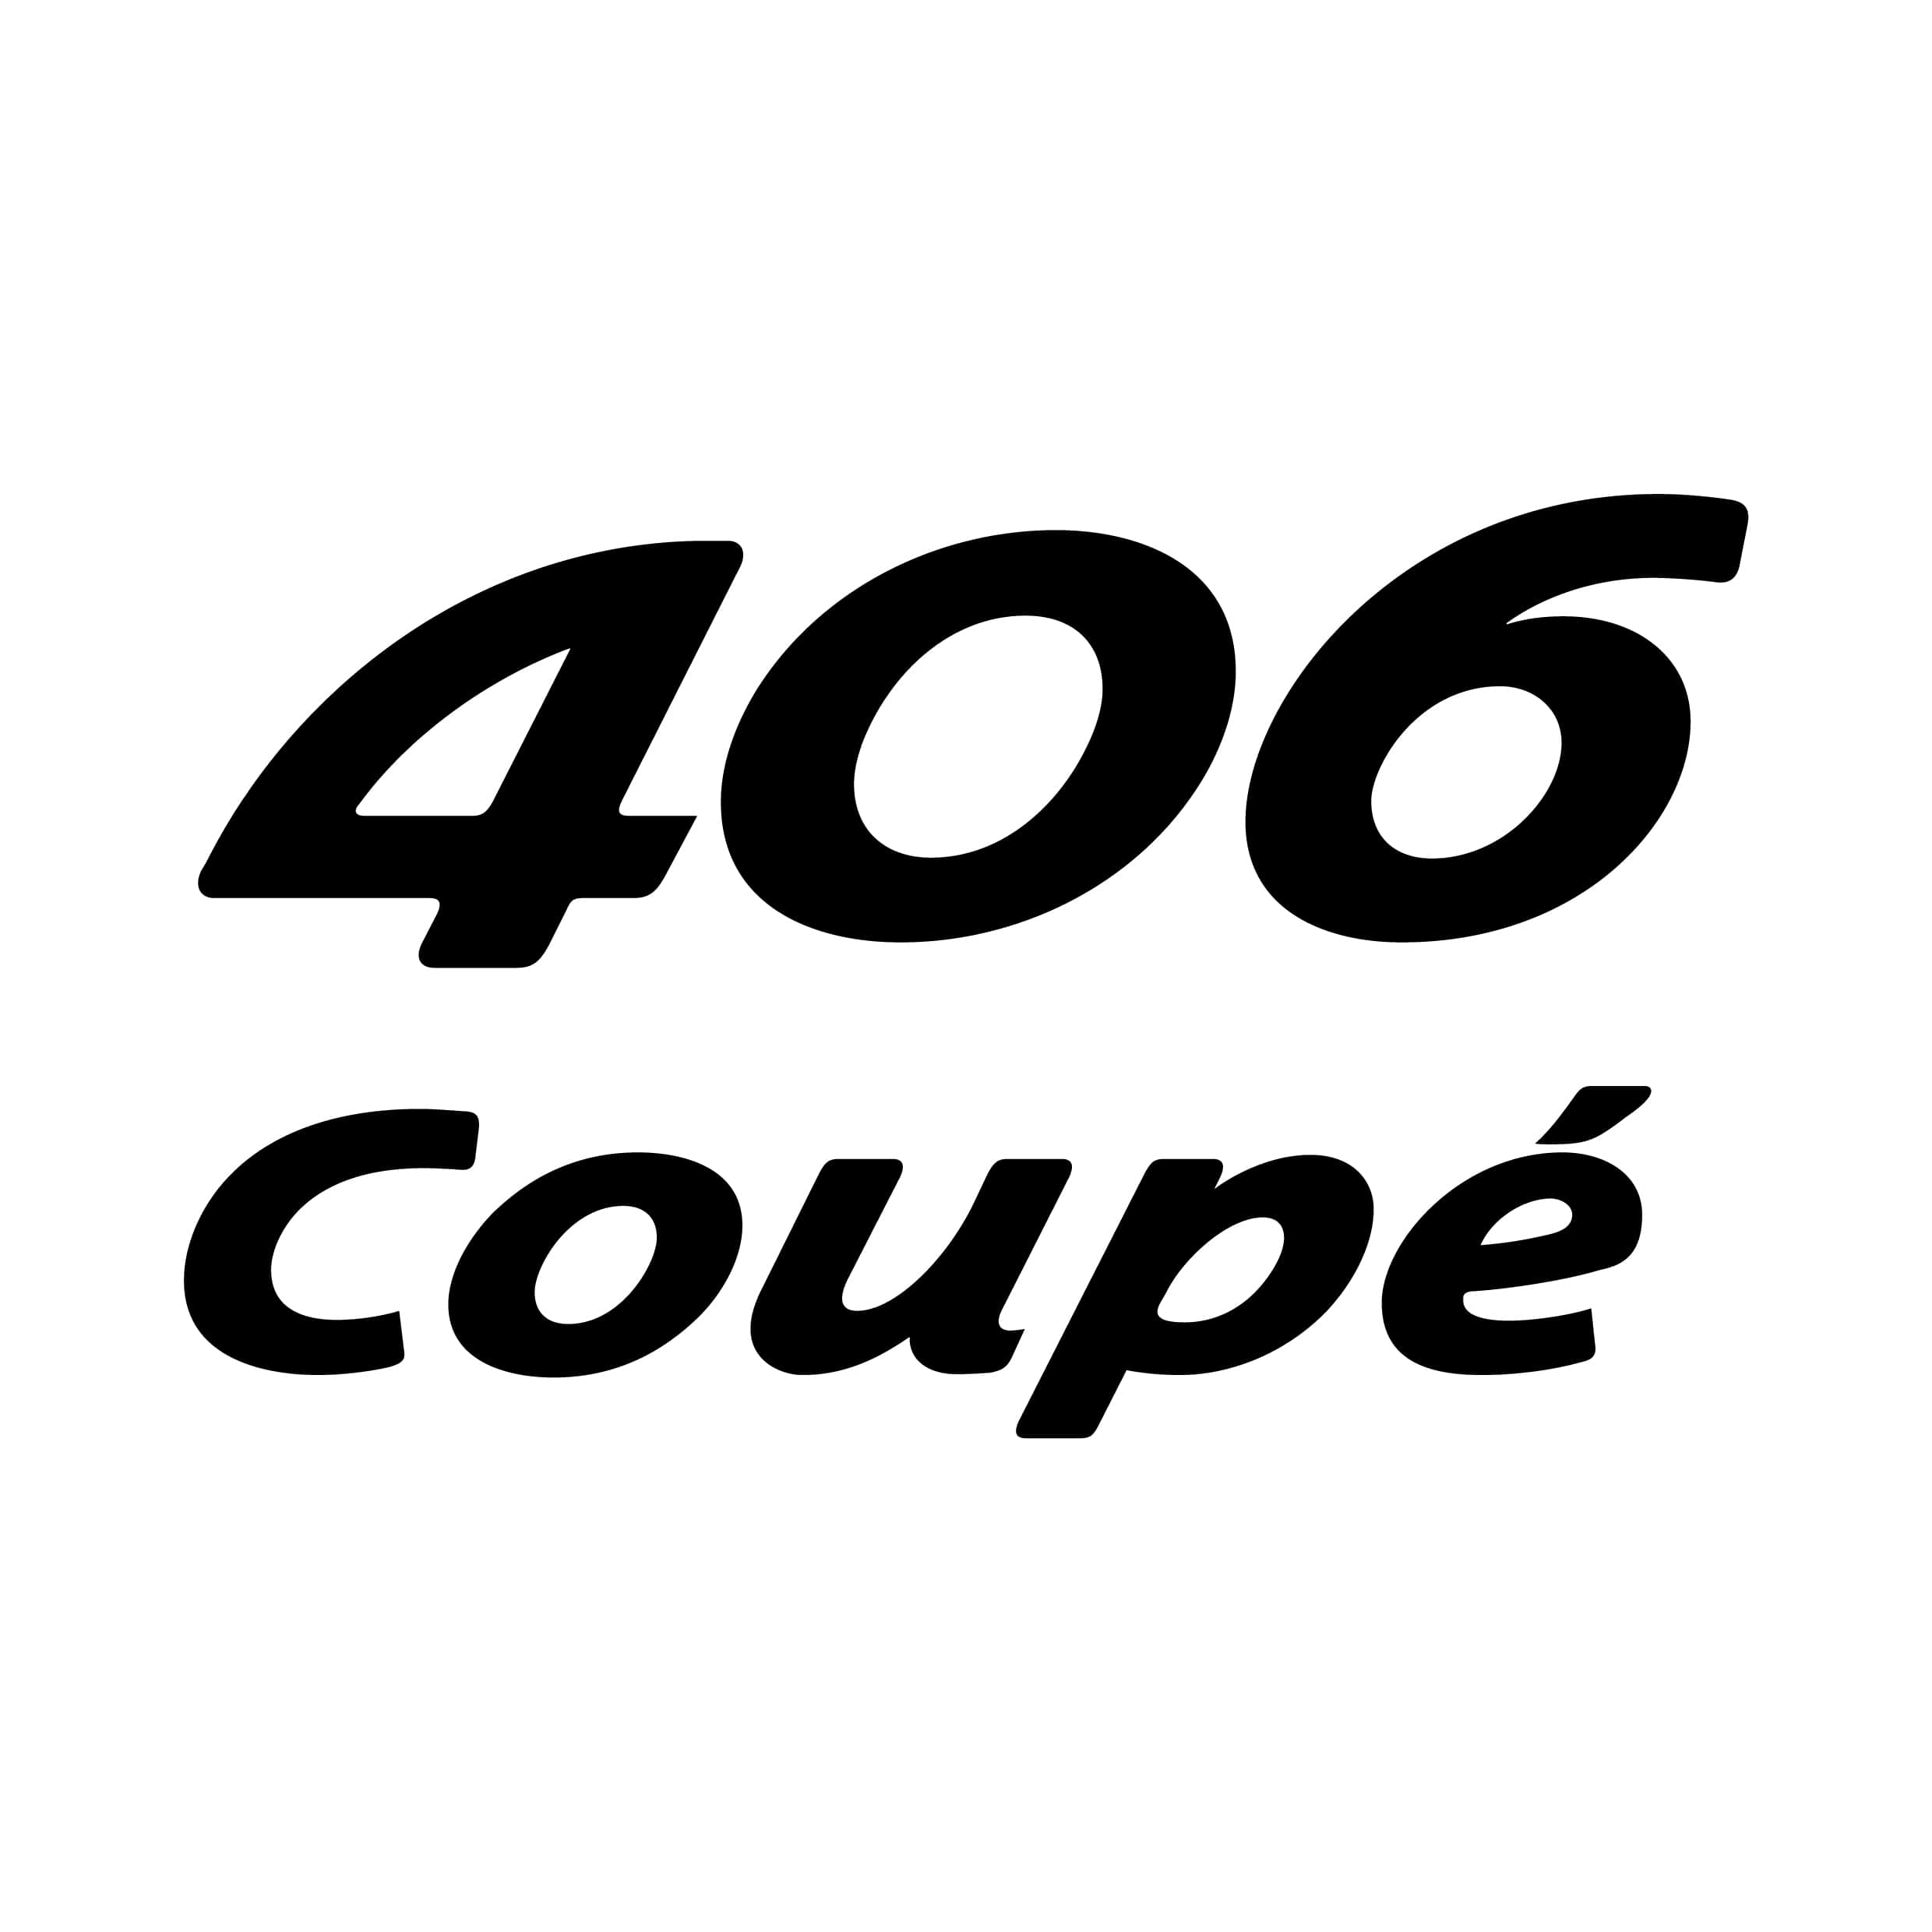 stickers-peugeot-406-coupe-ref49-autocollant-voiture-sticker-auto-autocollants-decals-sponsors-racing-tuning-sport-logo-min